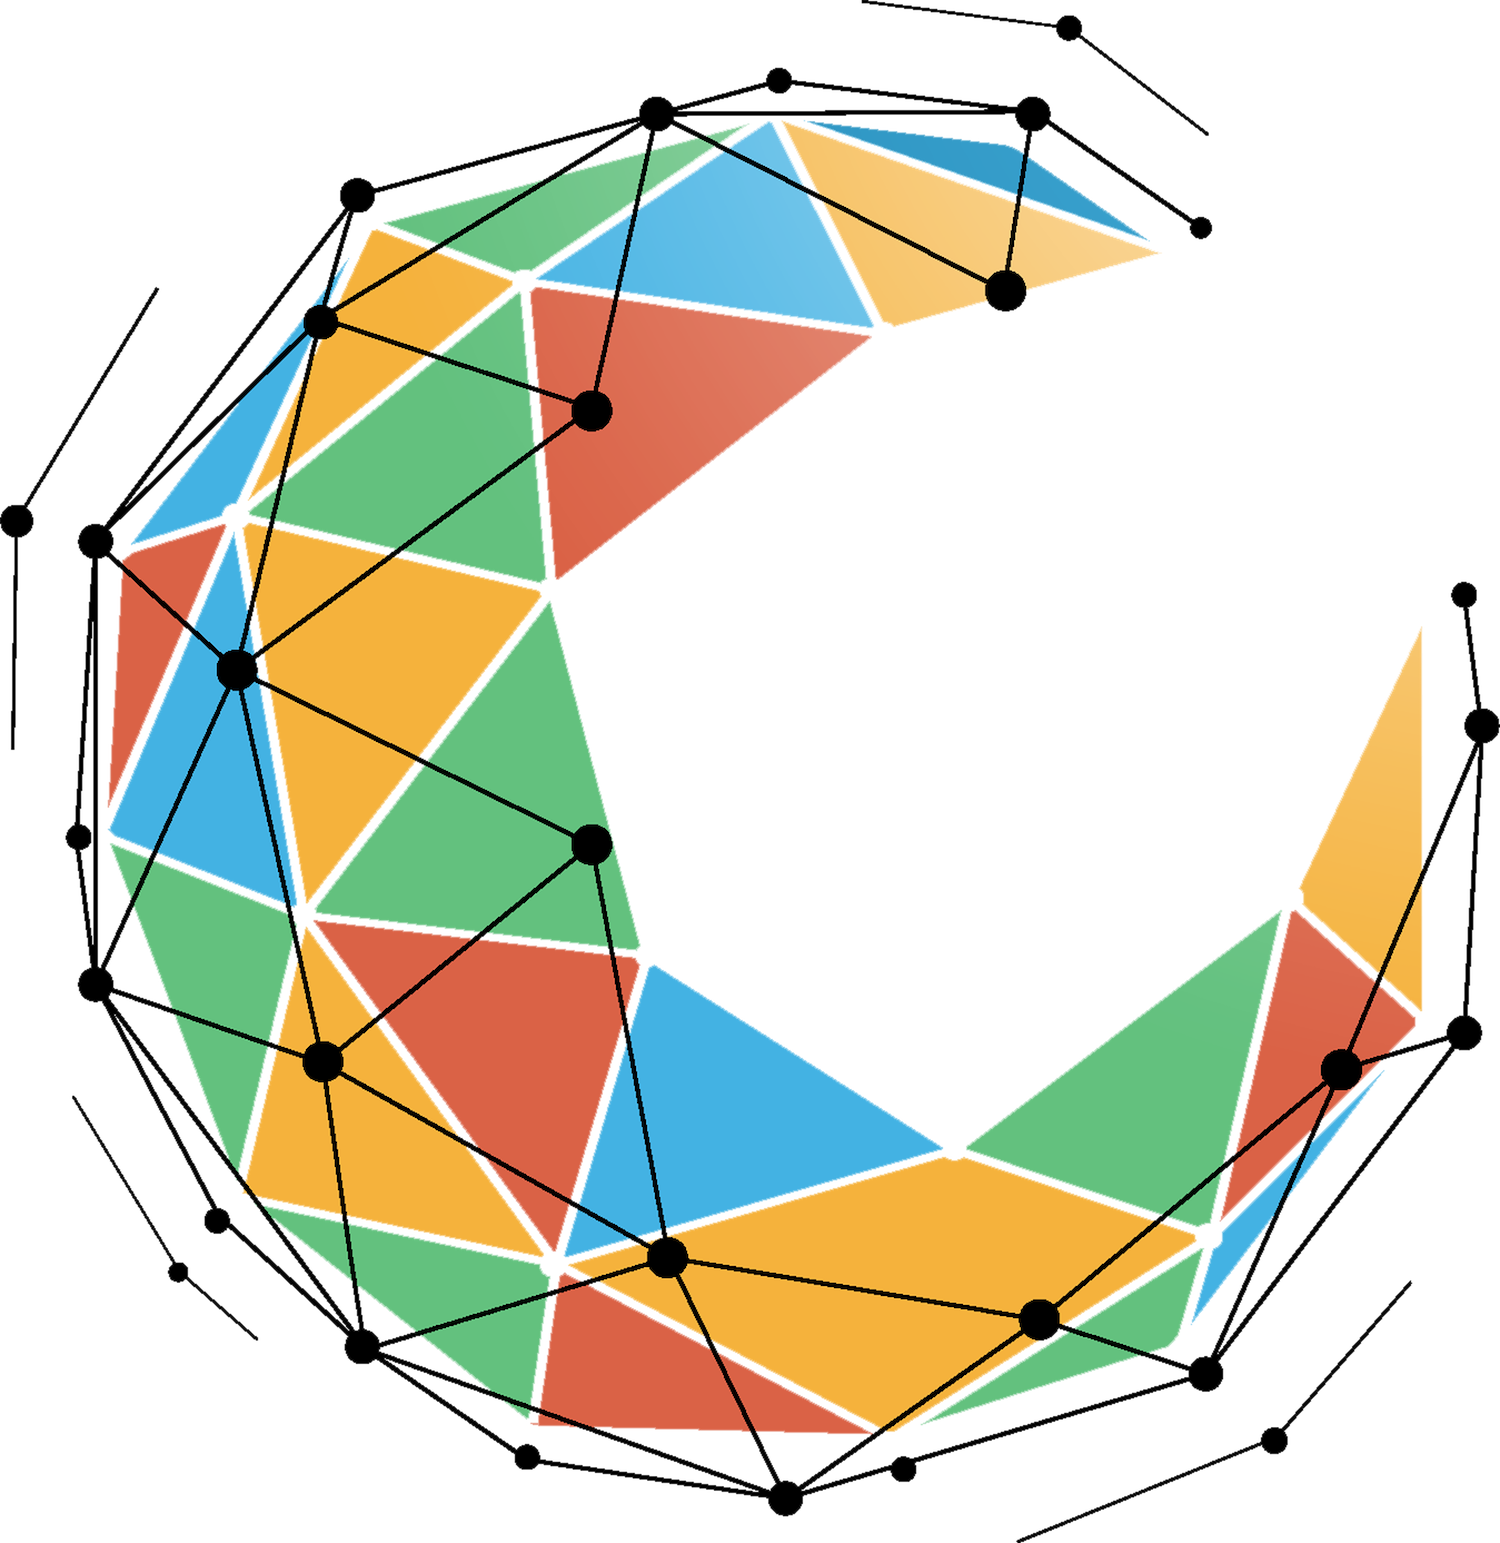 Mosaique Logo